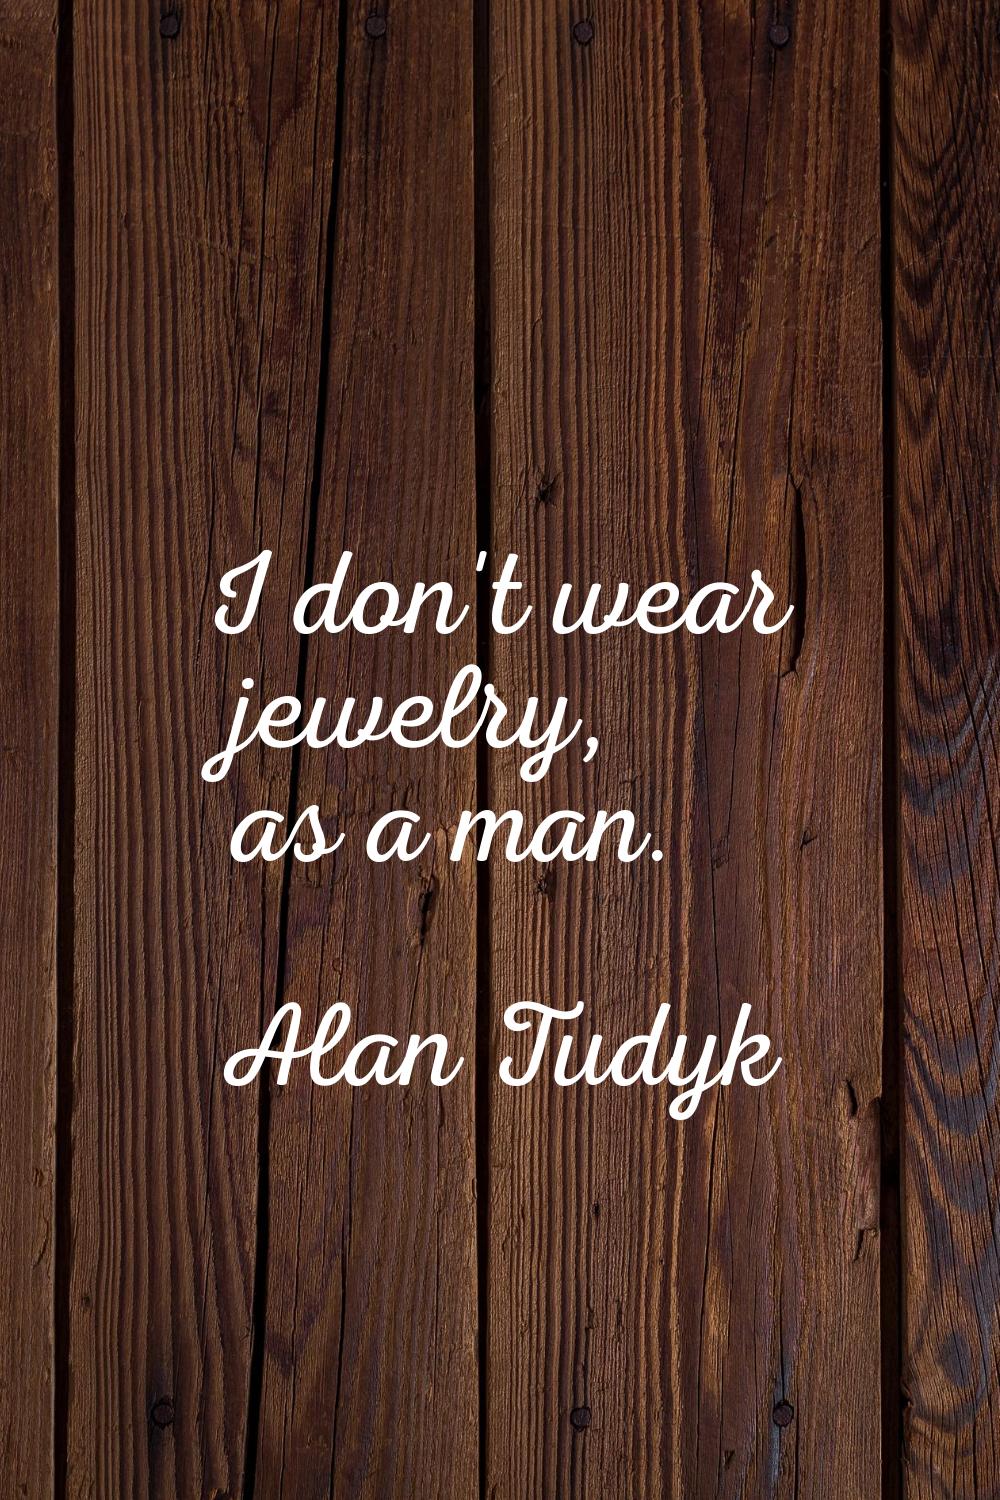 I don't wear jewelry, as a man.